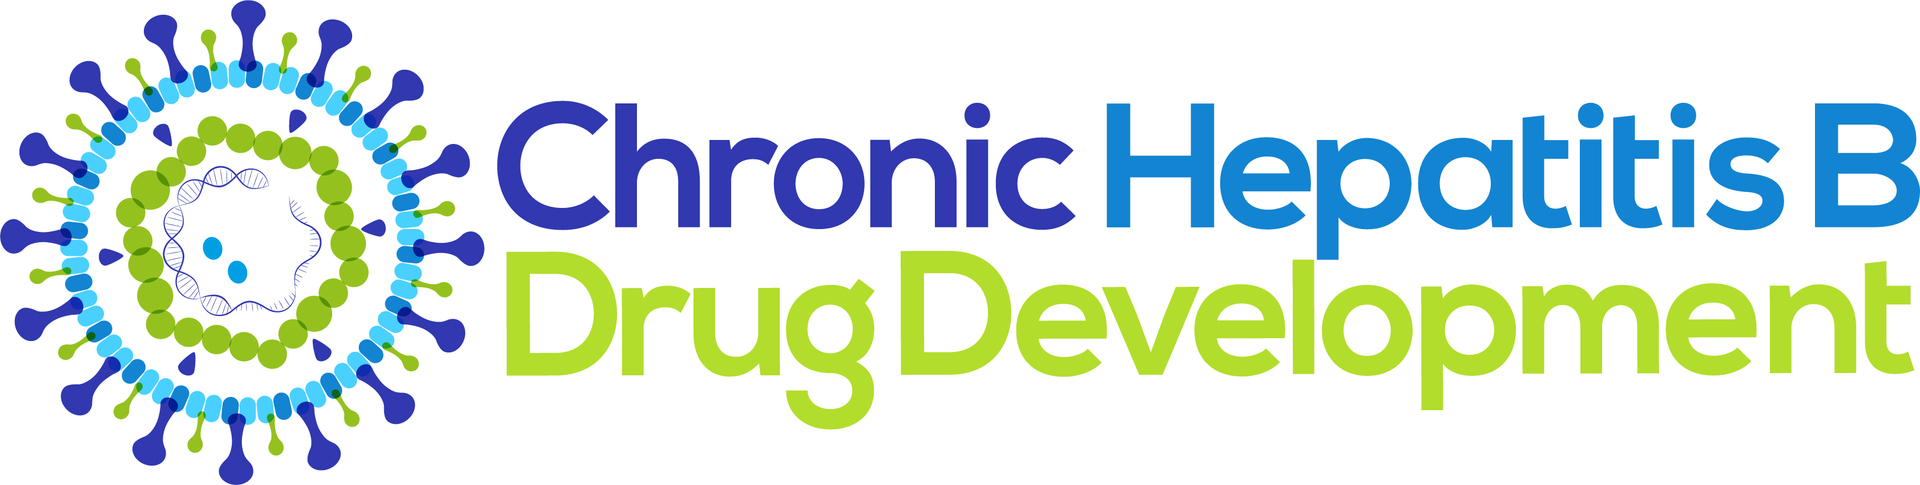 Chronic Hepatitis B Drug Development Summit, Online, United States